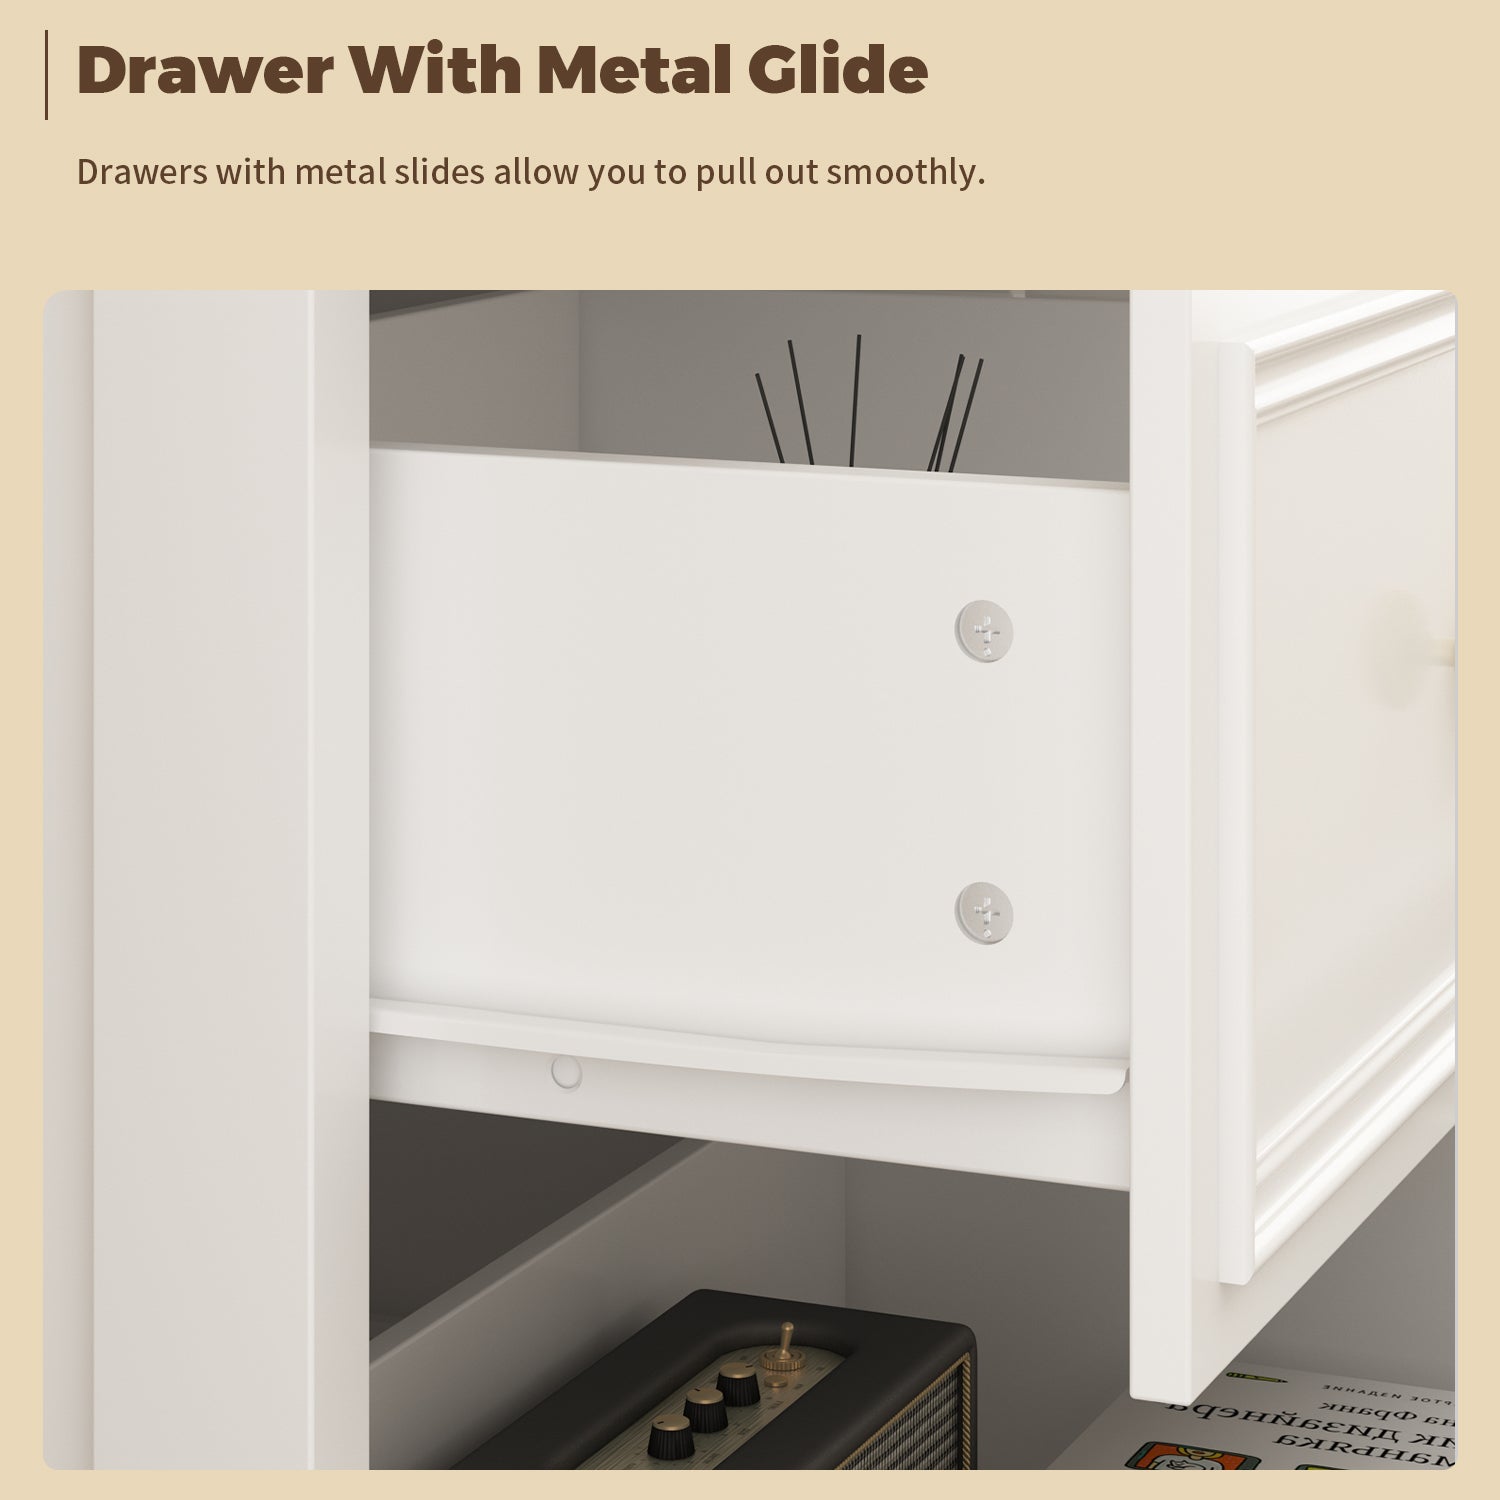 Hitow 6 Drawer White Double Dresser, Wood Dresser Chest Vertical